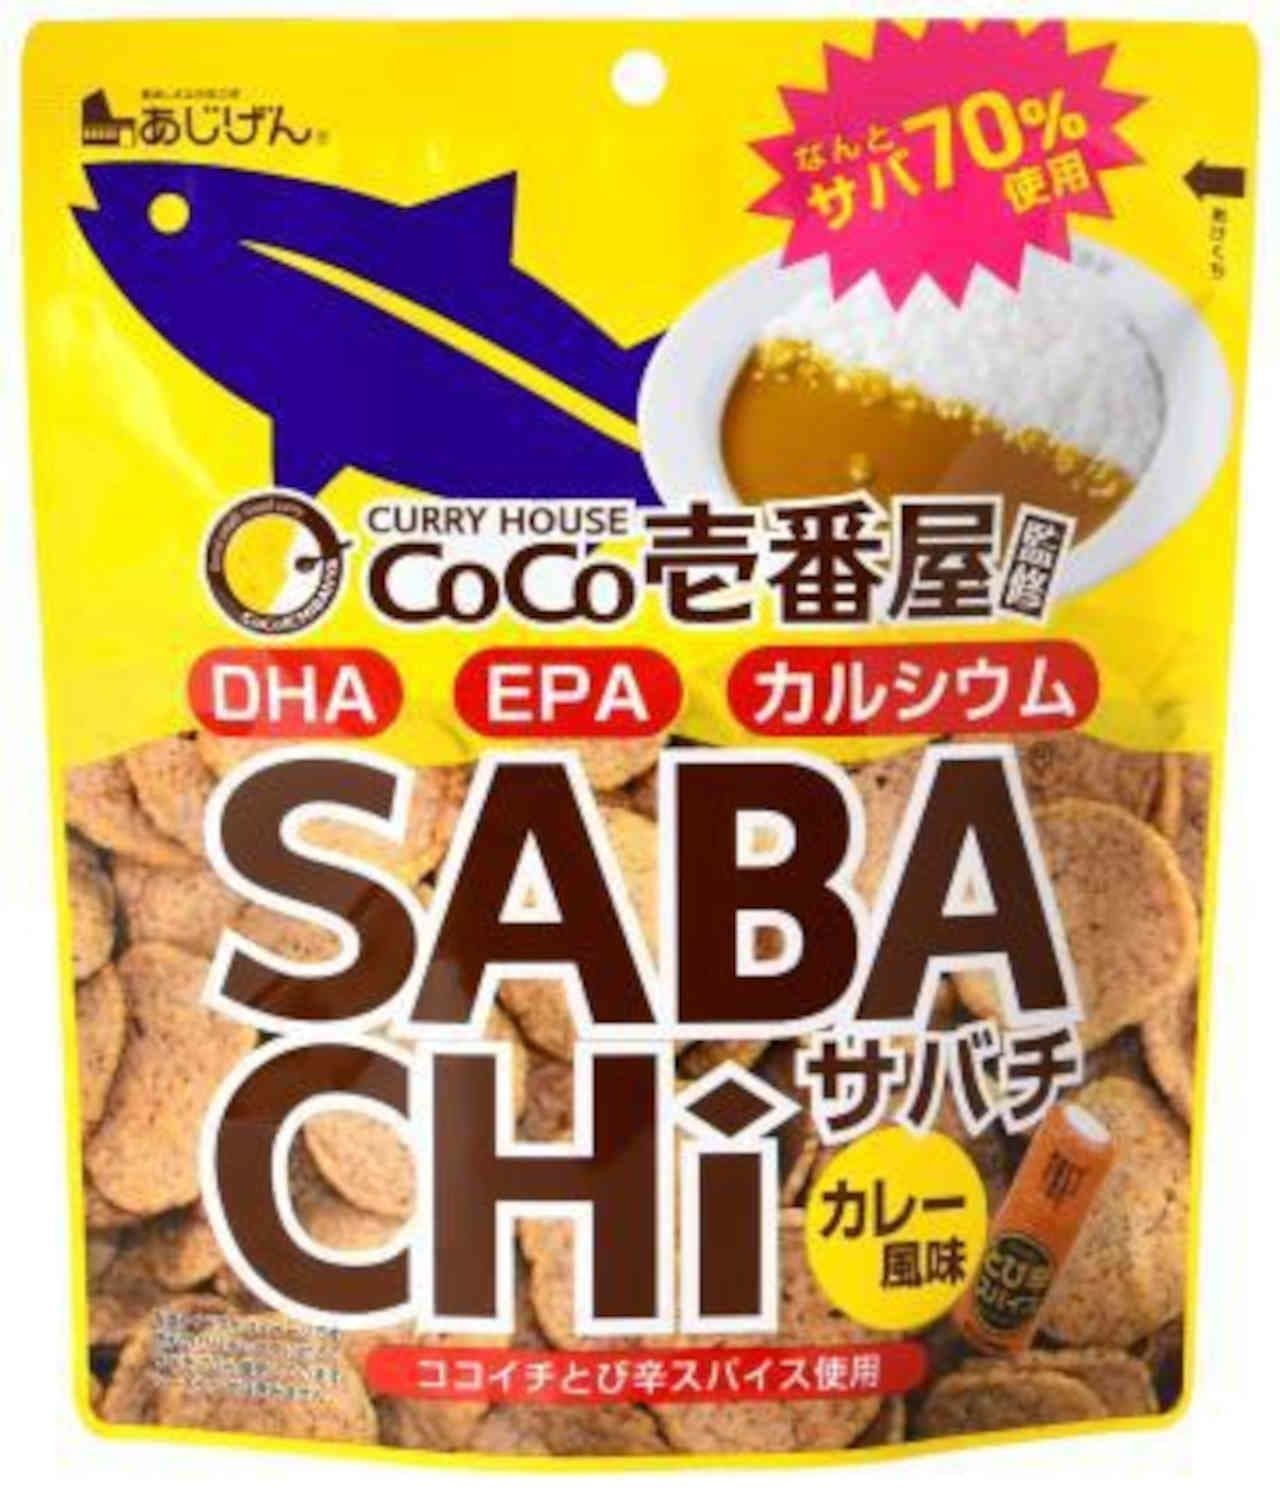 Coco Ichi- "SABACHi CoCo Ichibanya Supervision Curry Flavor